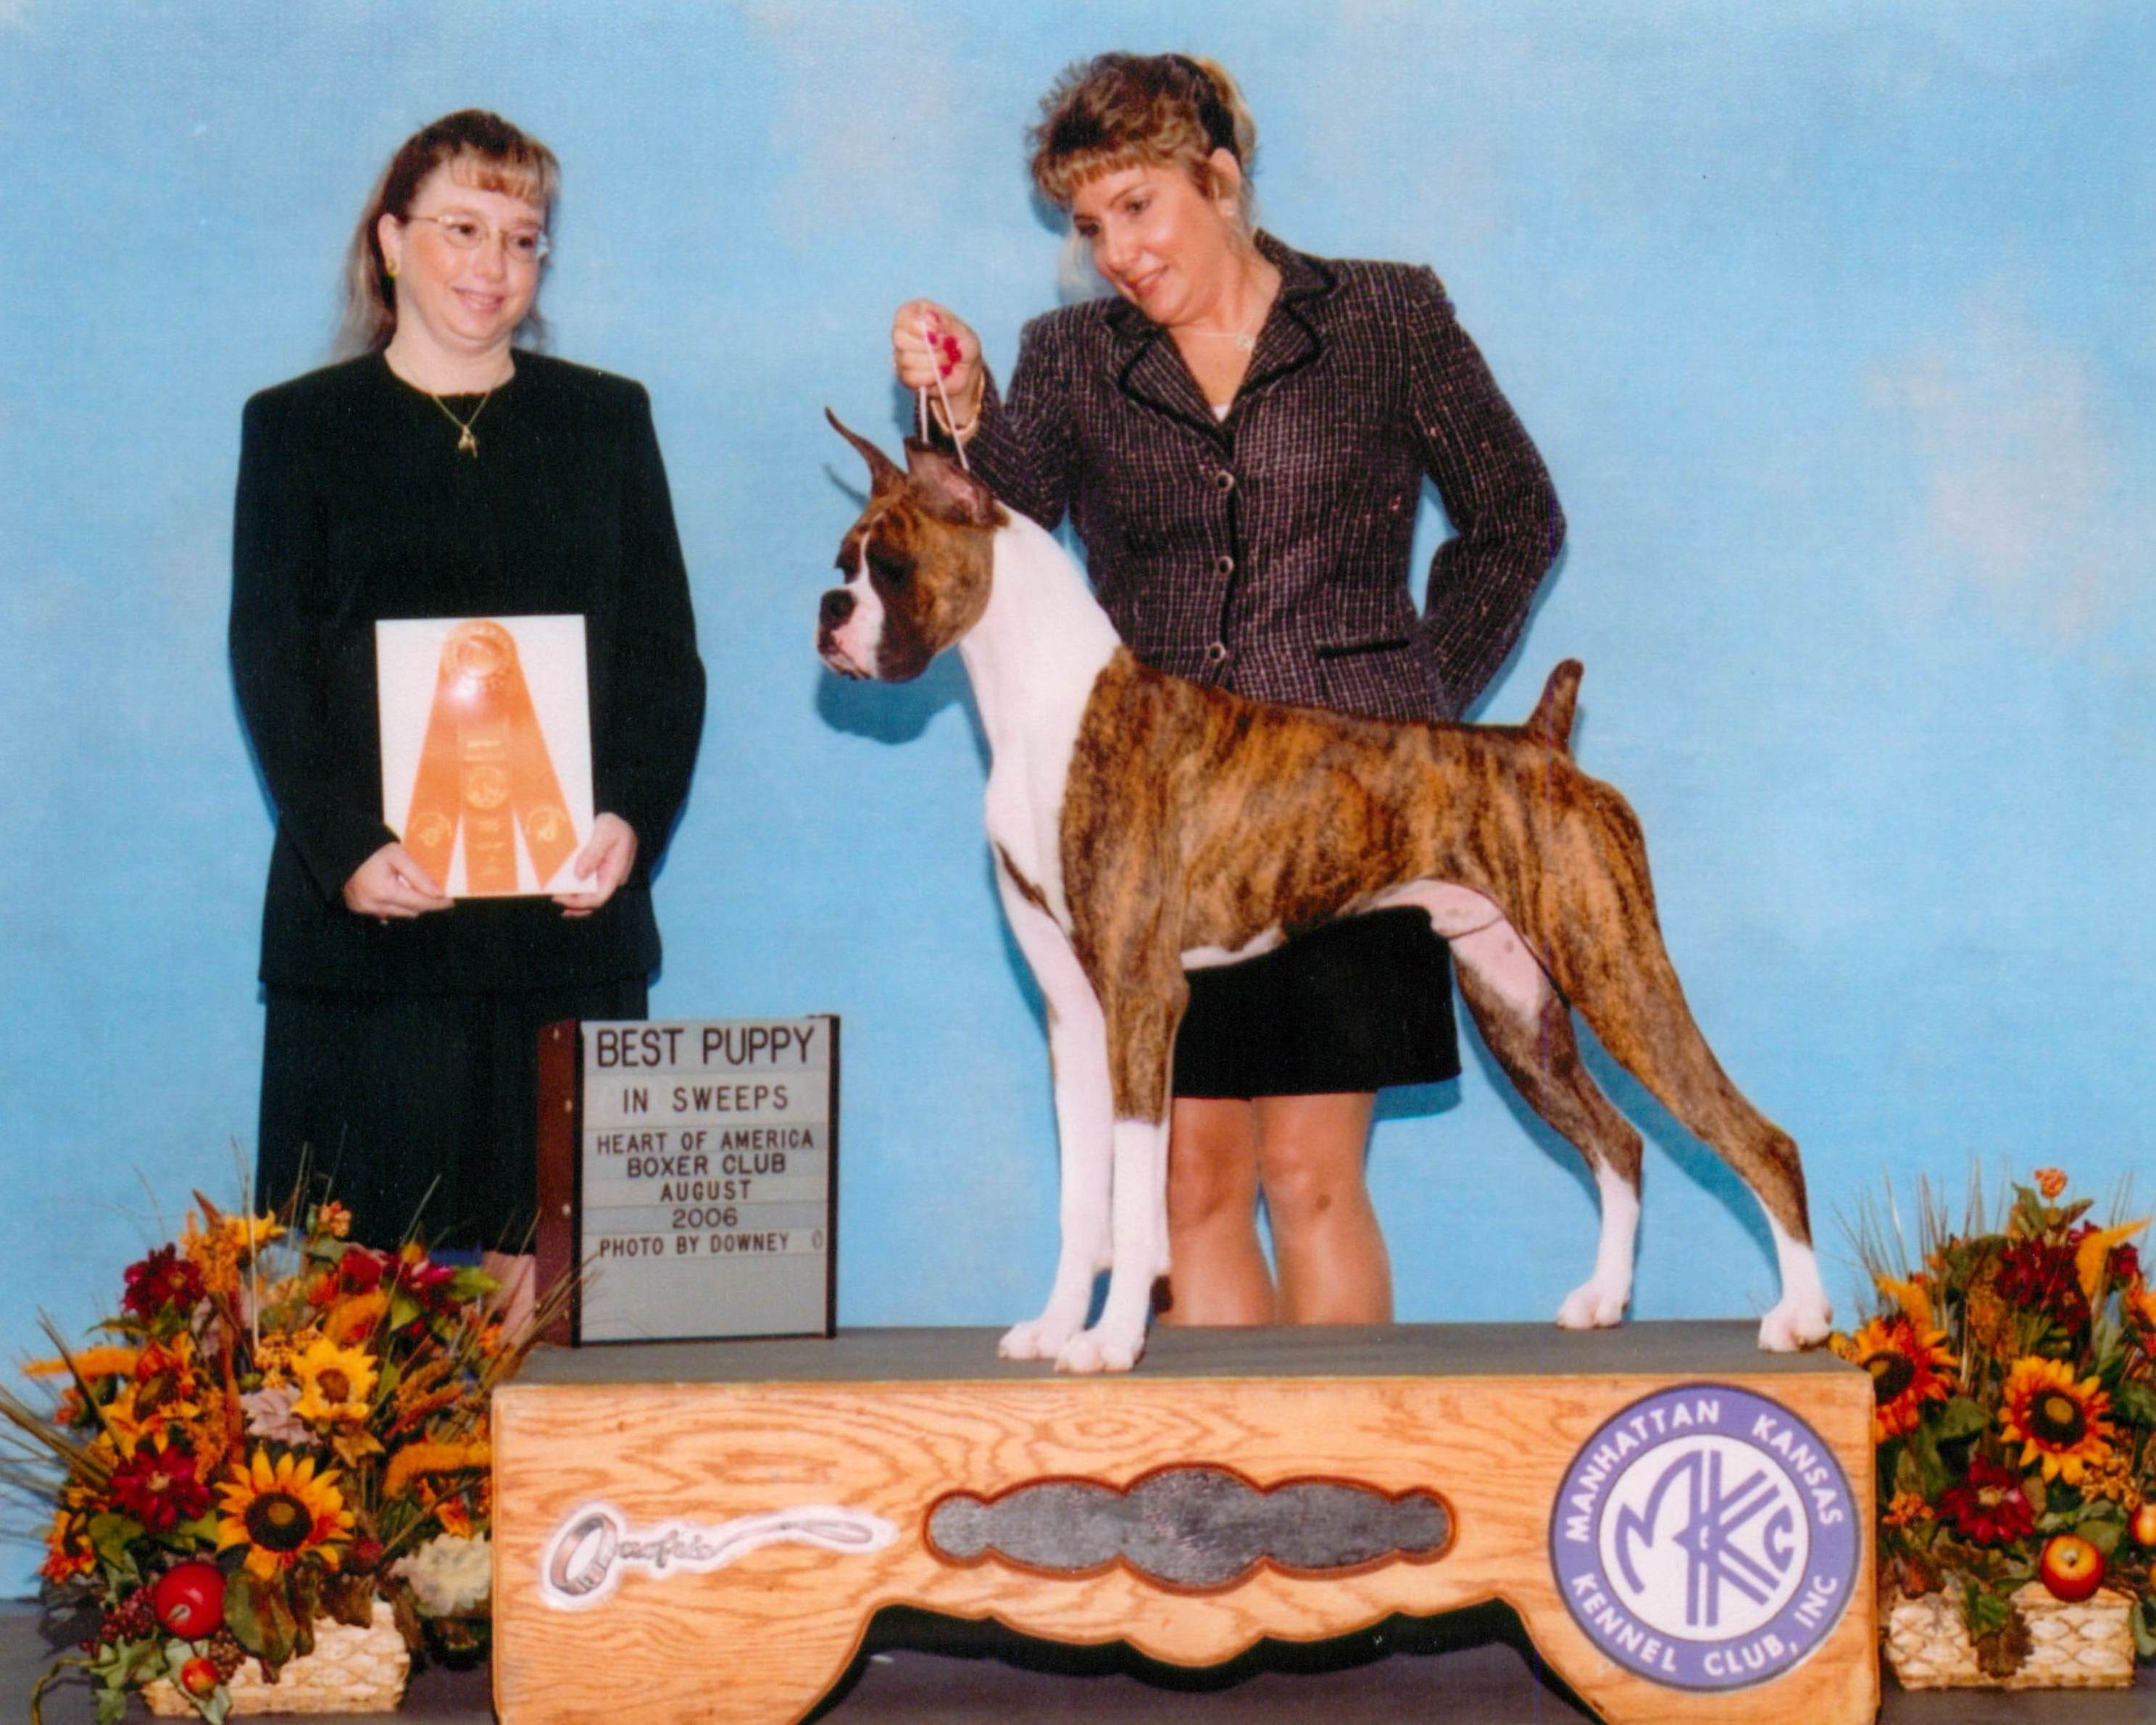 Best Puppy @ 2006 Specialty Show #2